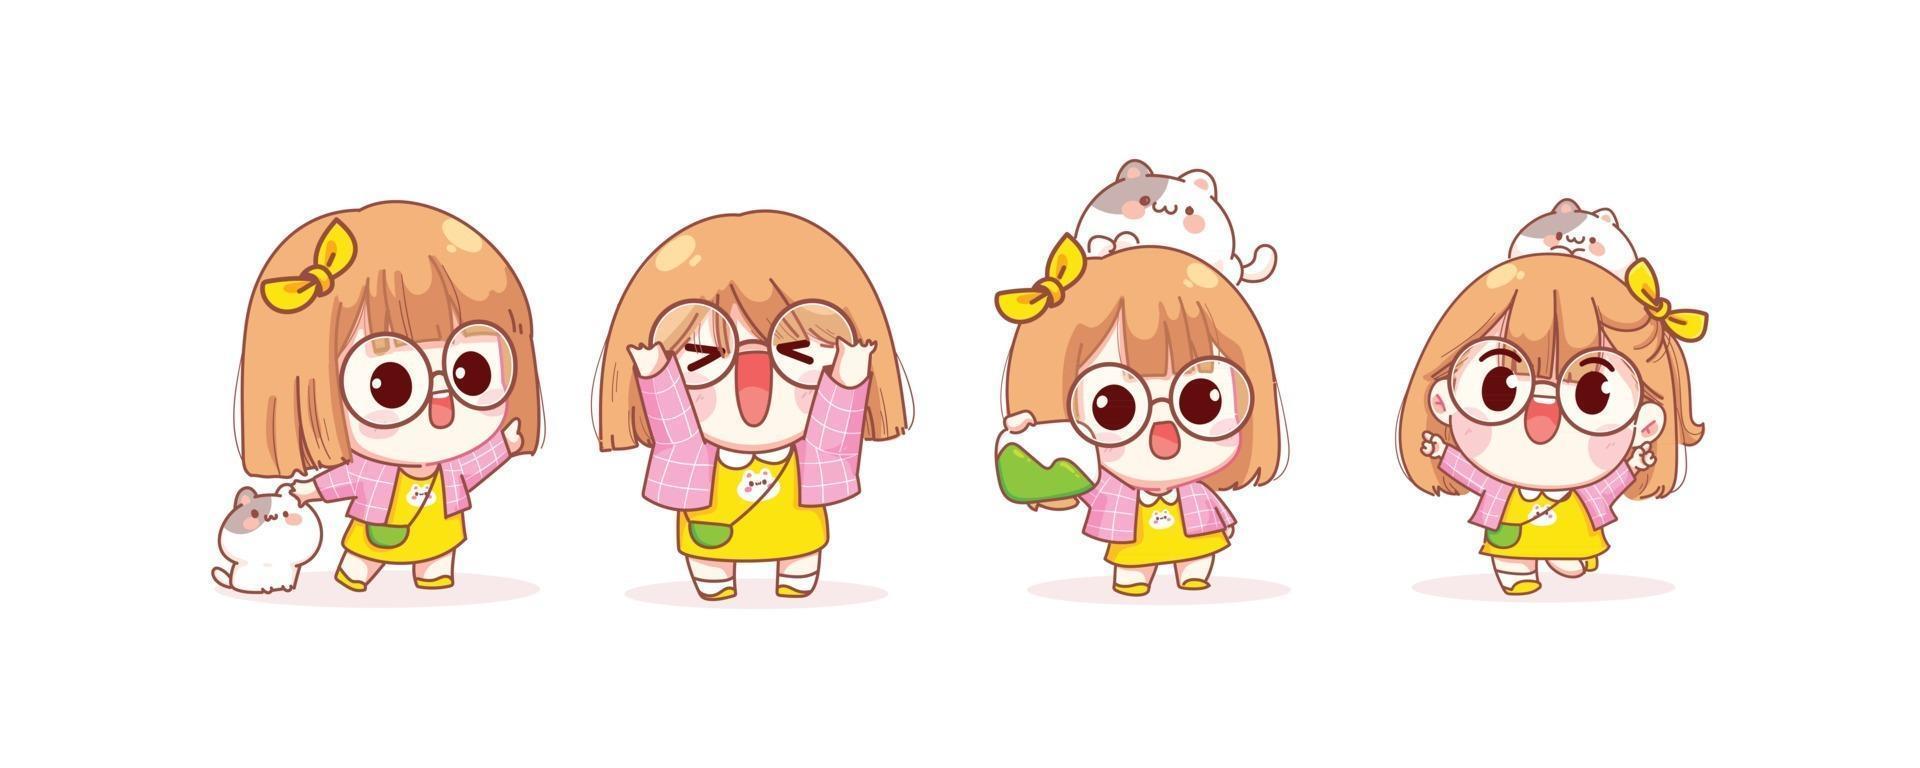 Cute girl in different gestures cartoon illustration vector